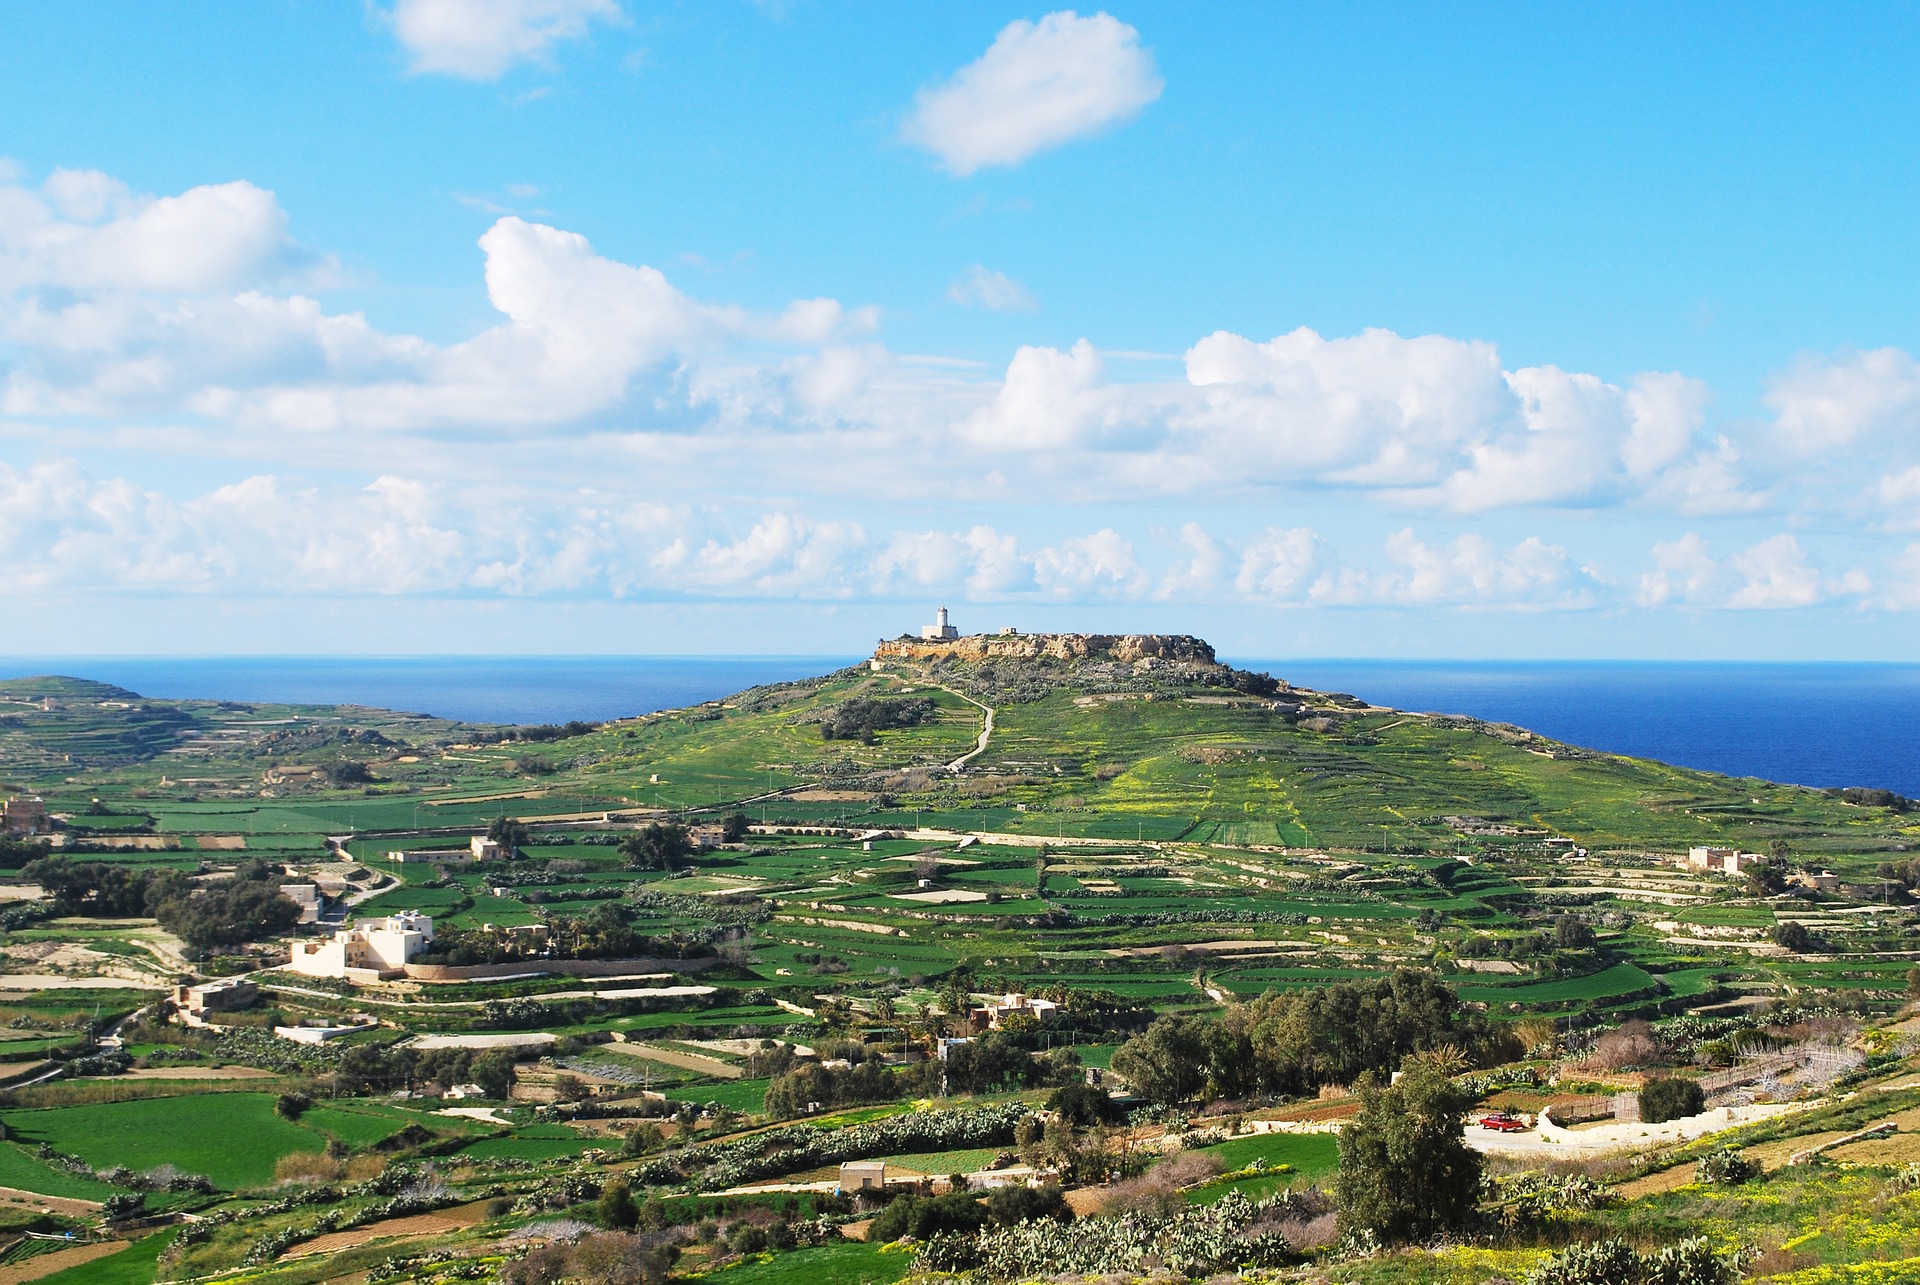 Insel Malta Reise 2019